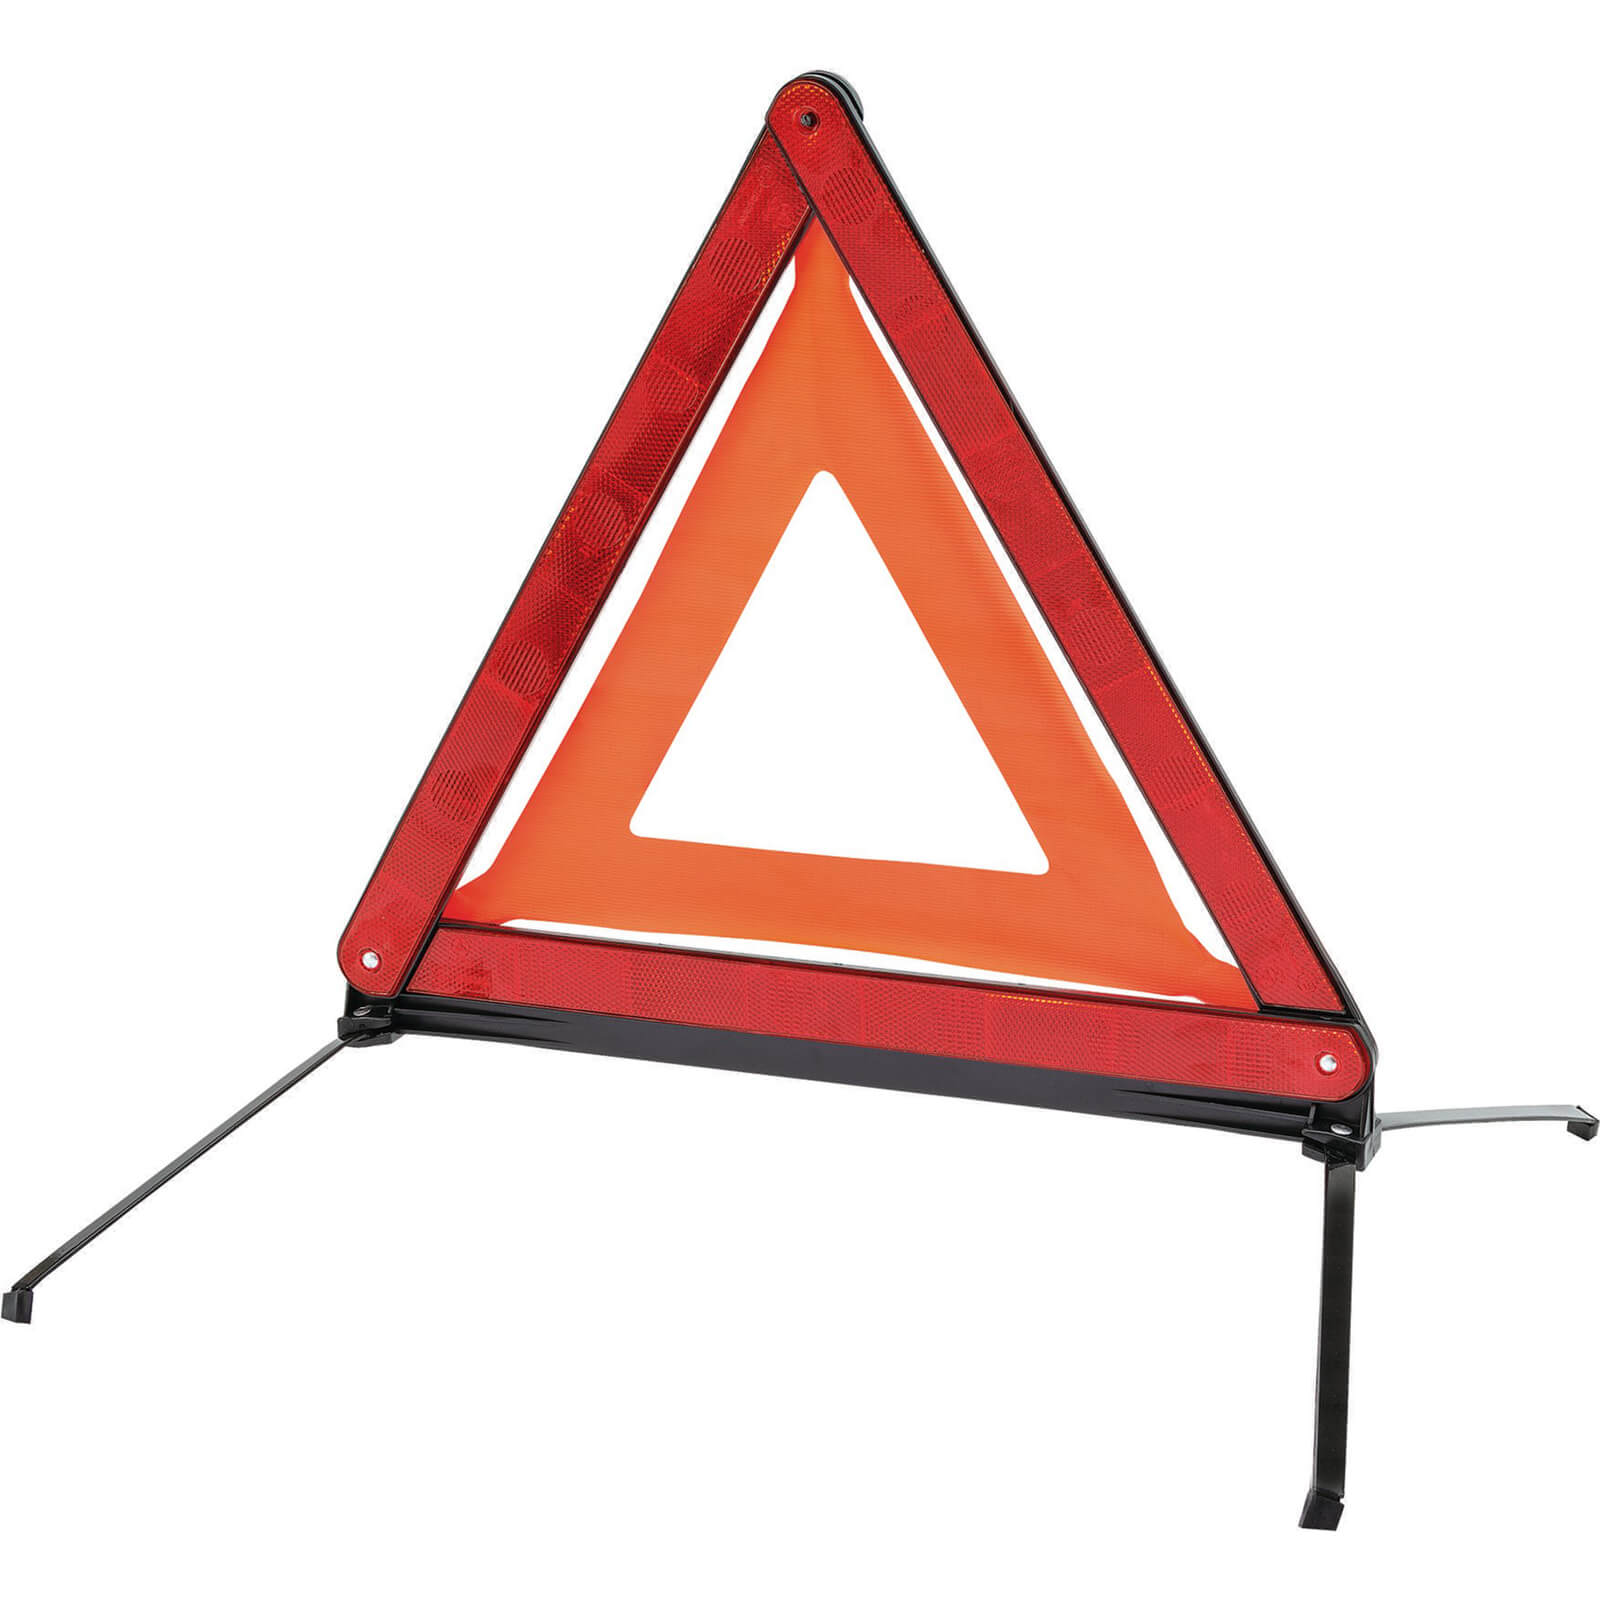 Image of Draper Vehicle Warning Triangle